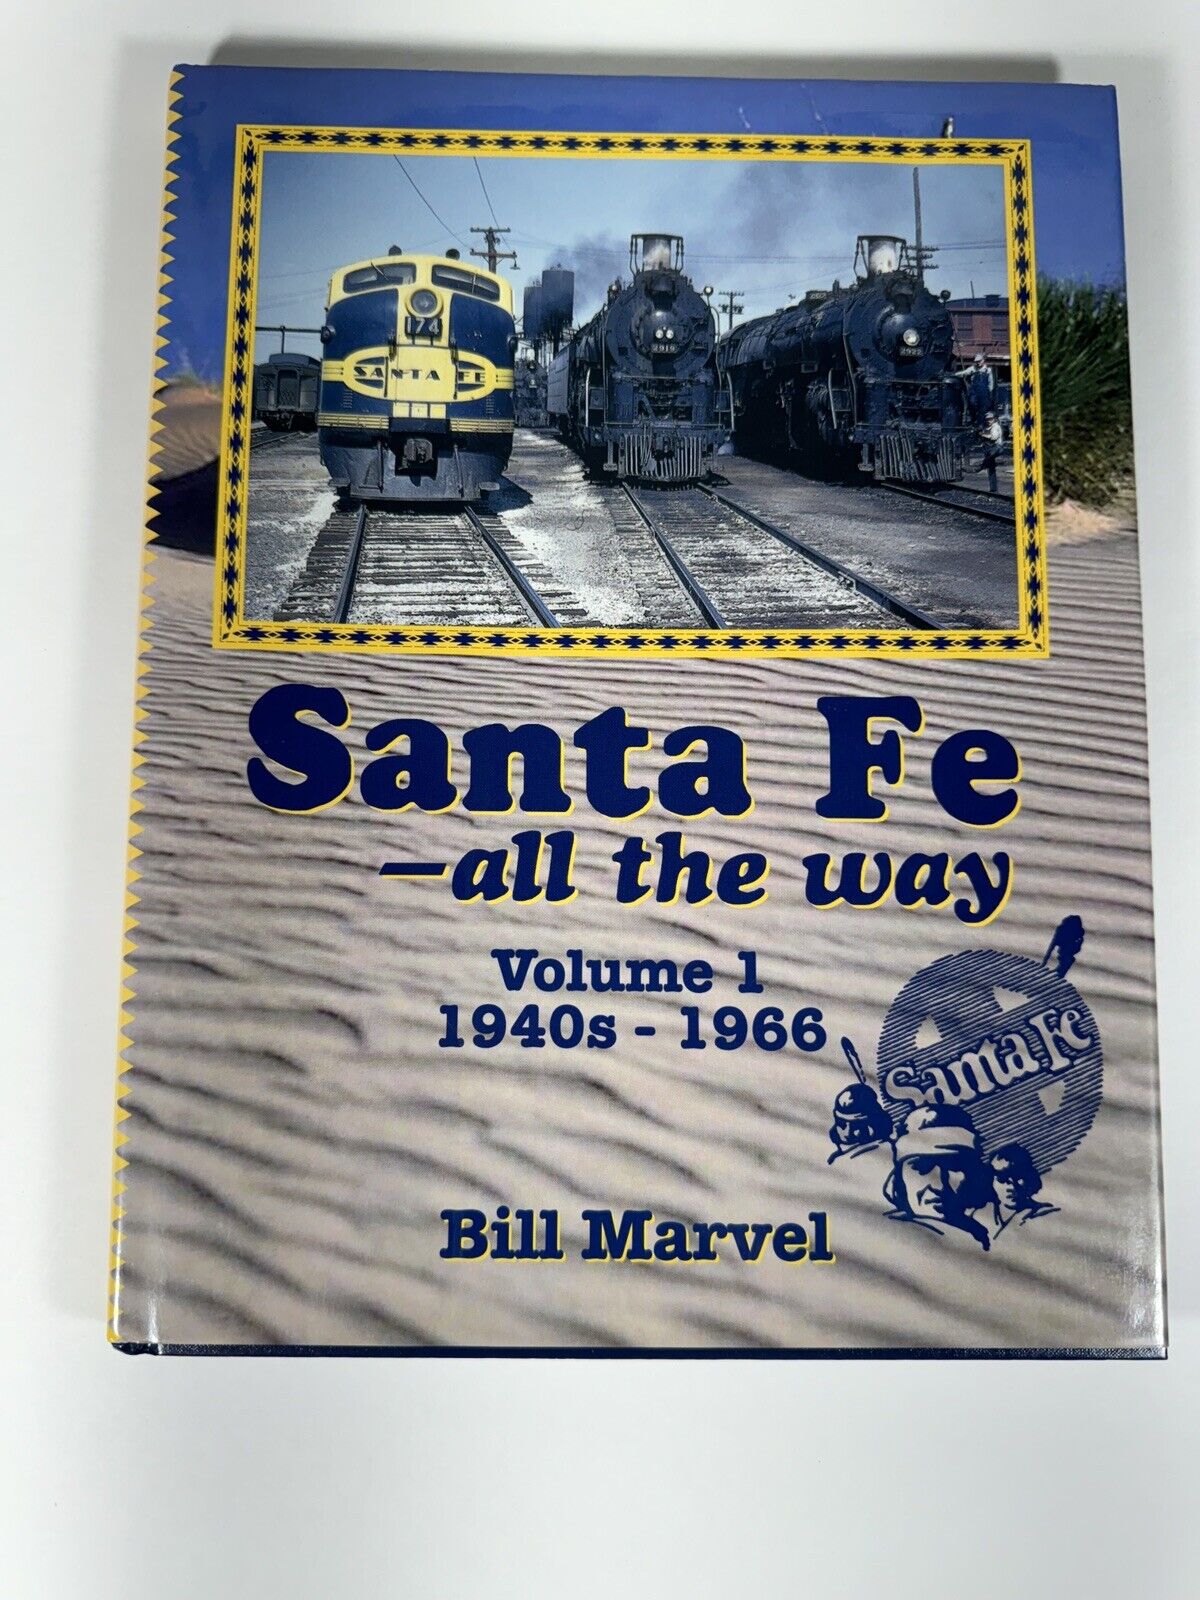 Morning Sun Books - Santa Fe all the way Vol. 1 1940s-1966 by Bill Marvel ©1998